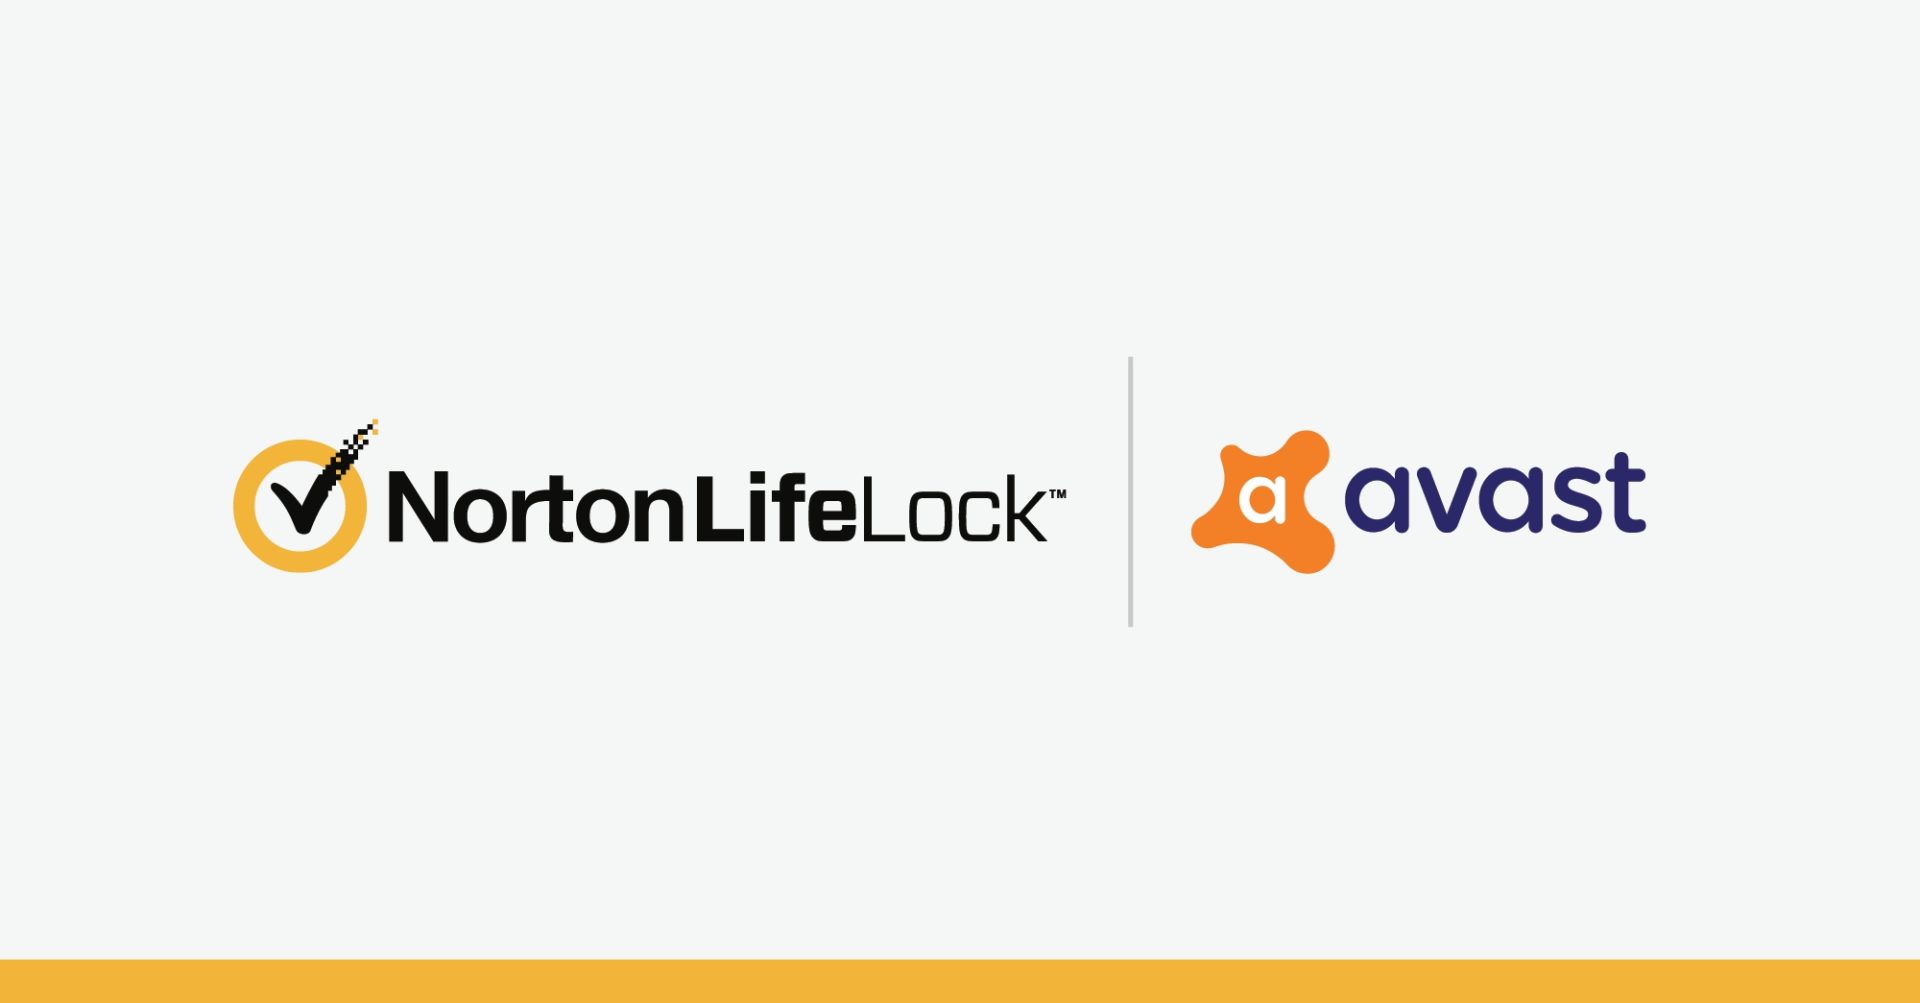 Norton เข้าซื้อ Avast รวมเป็นอาณาจักร antivirus มูลค่ากว่า 2.6 แสนล้านบาท!